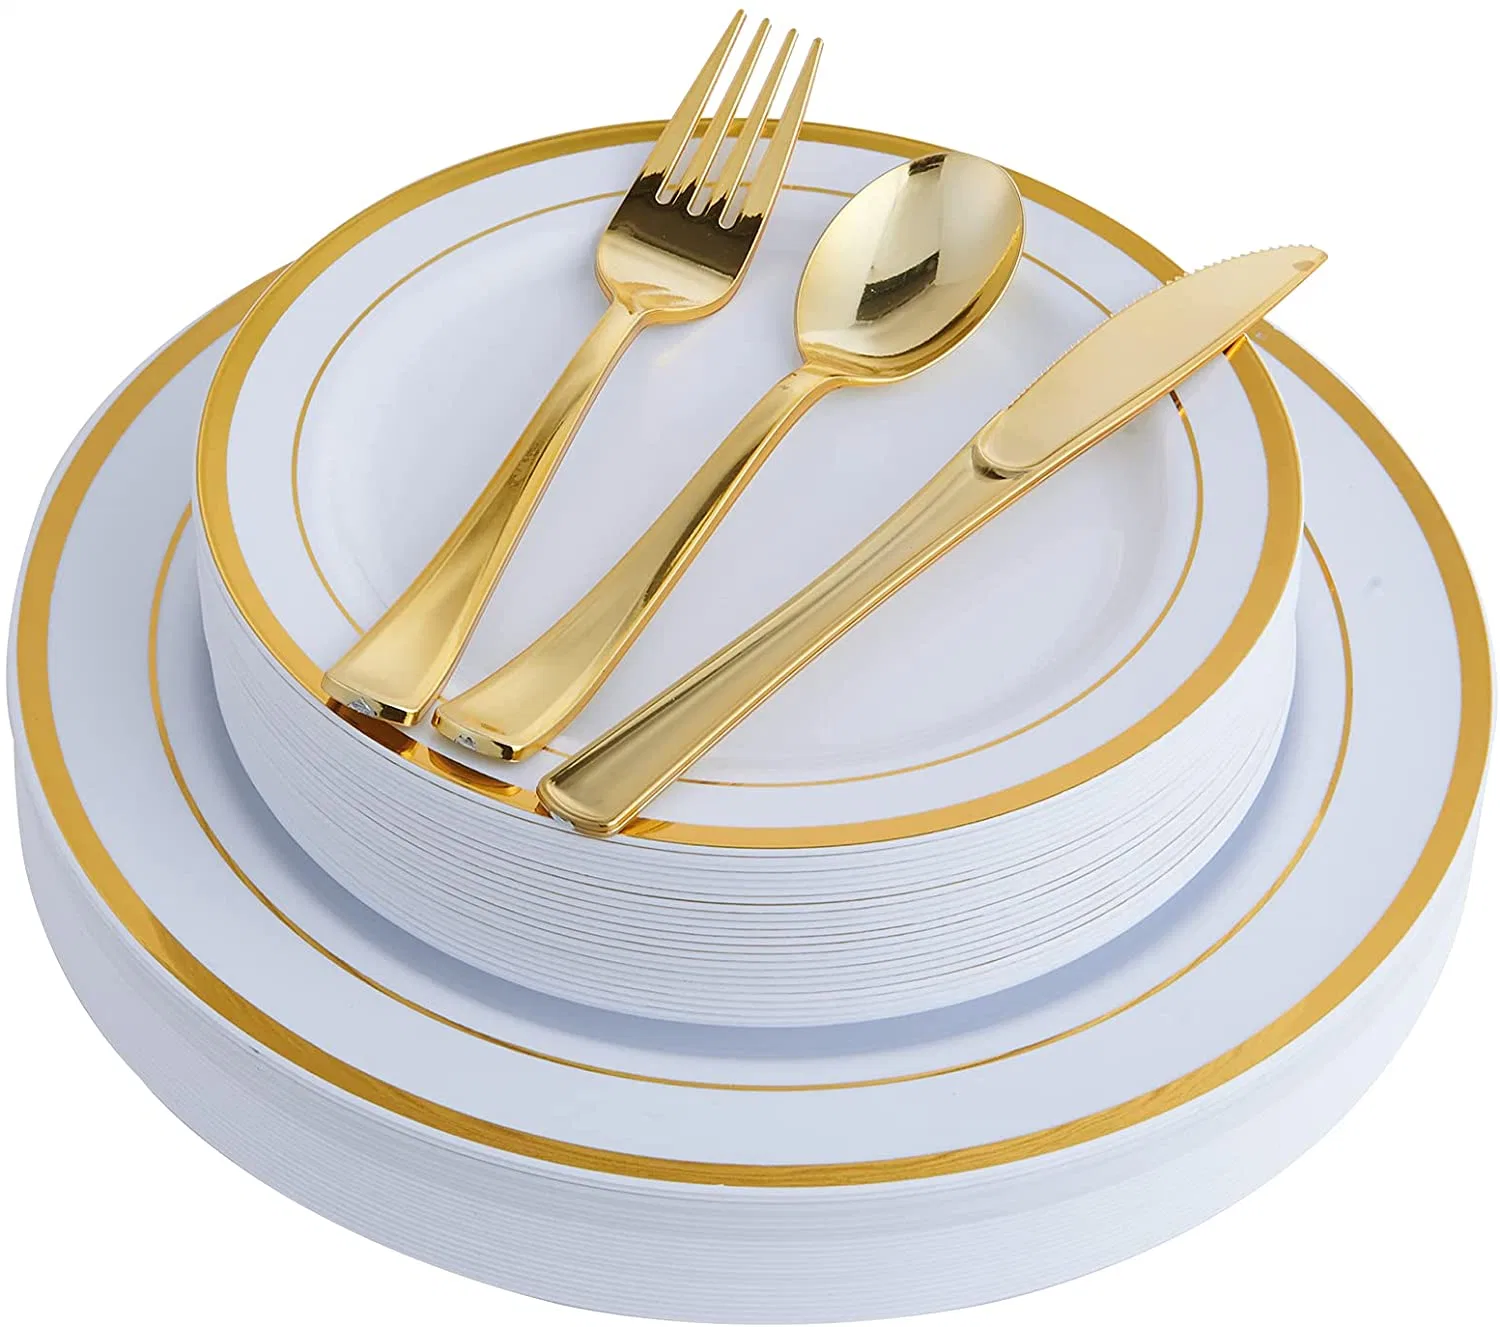 125PCS Gold Plastic Dinnerware Set for Party